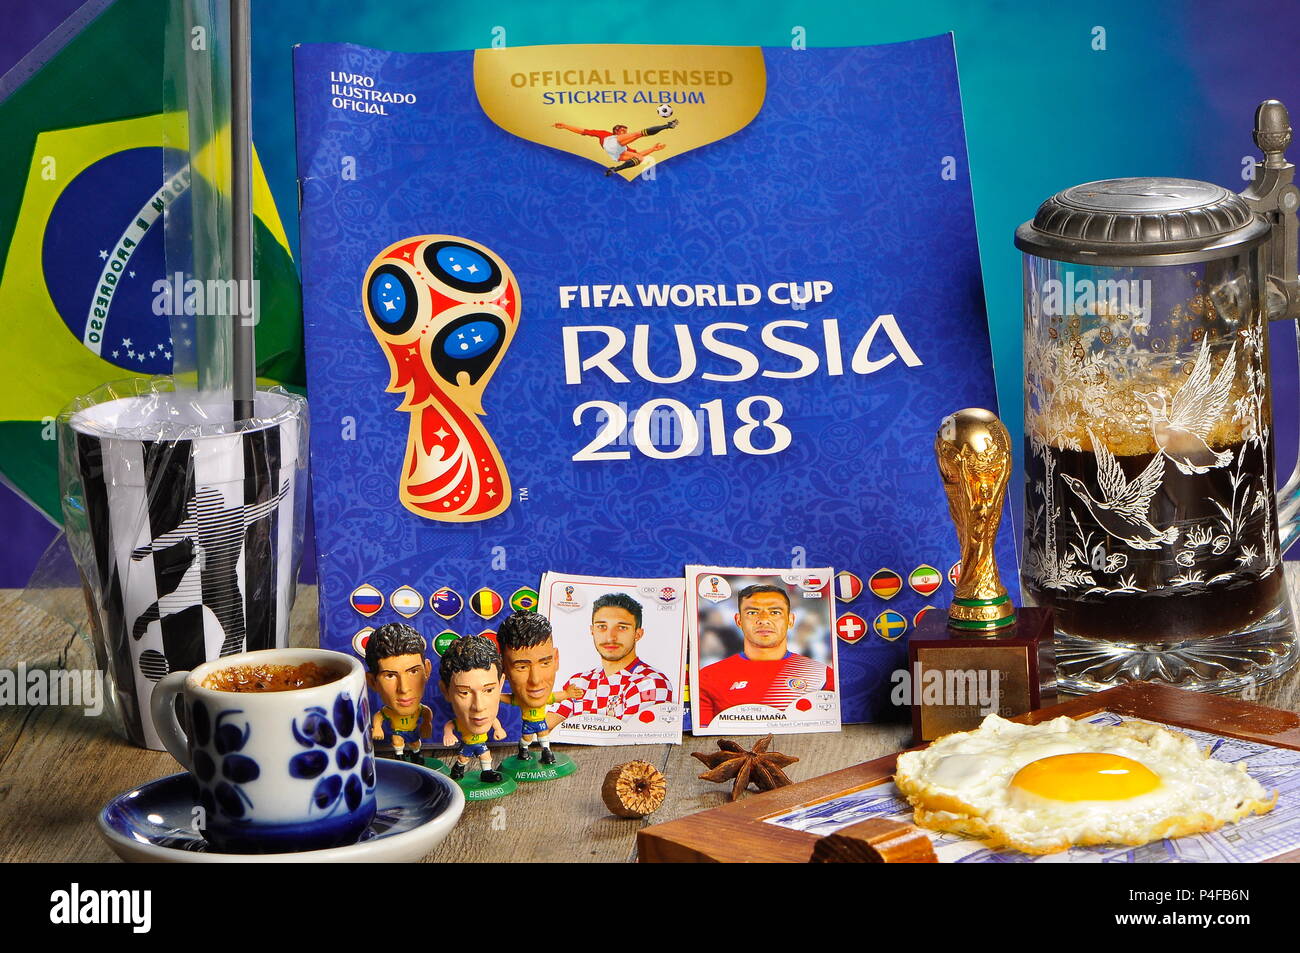 Fifa World Cup Russia 2018 breakfast photo concept Stock Photo